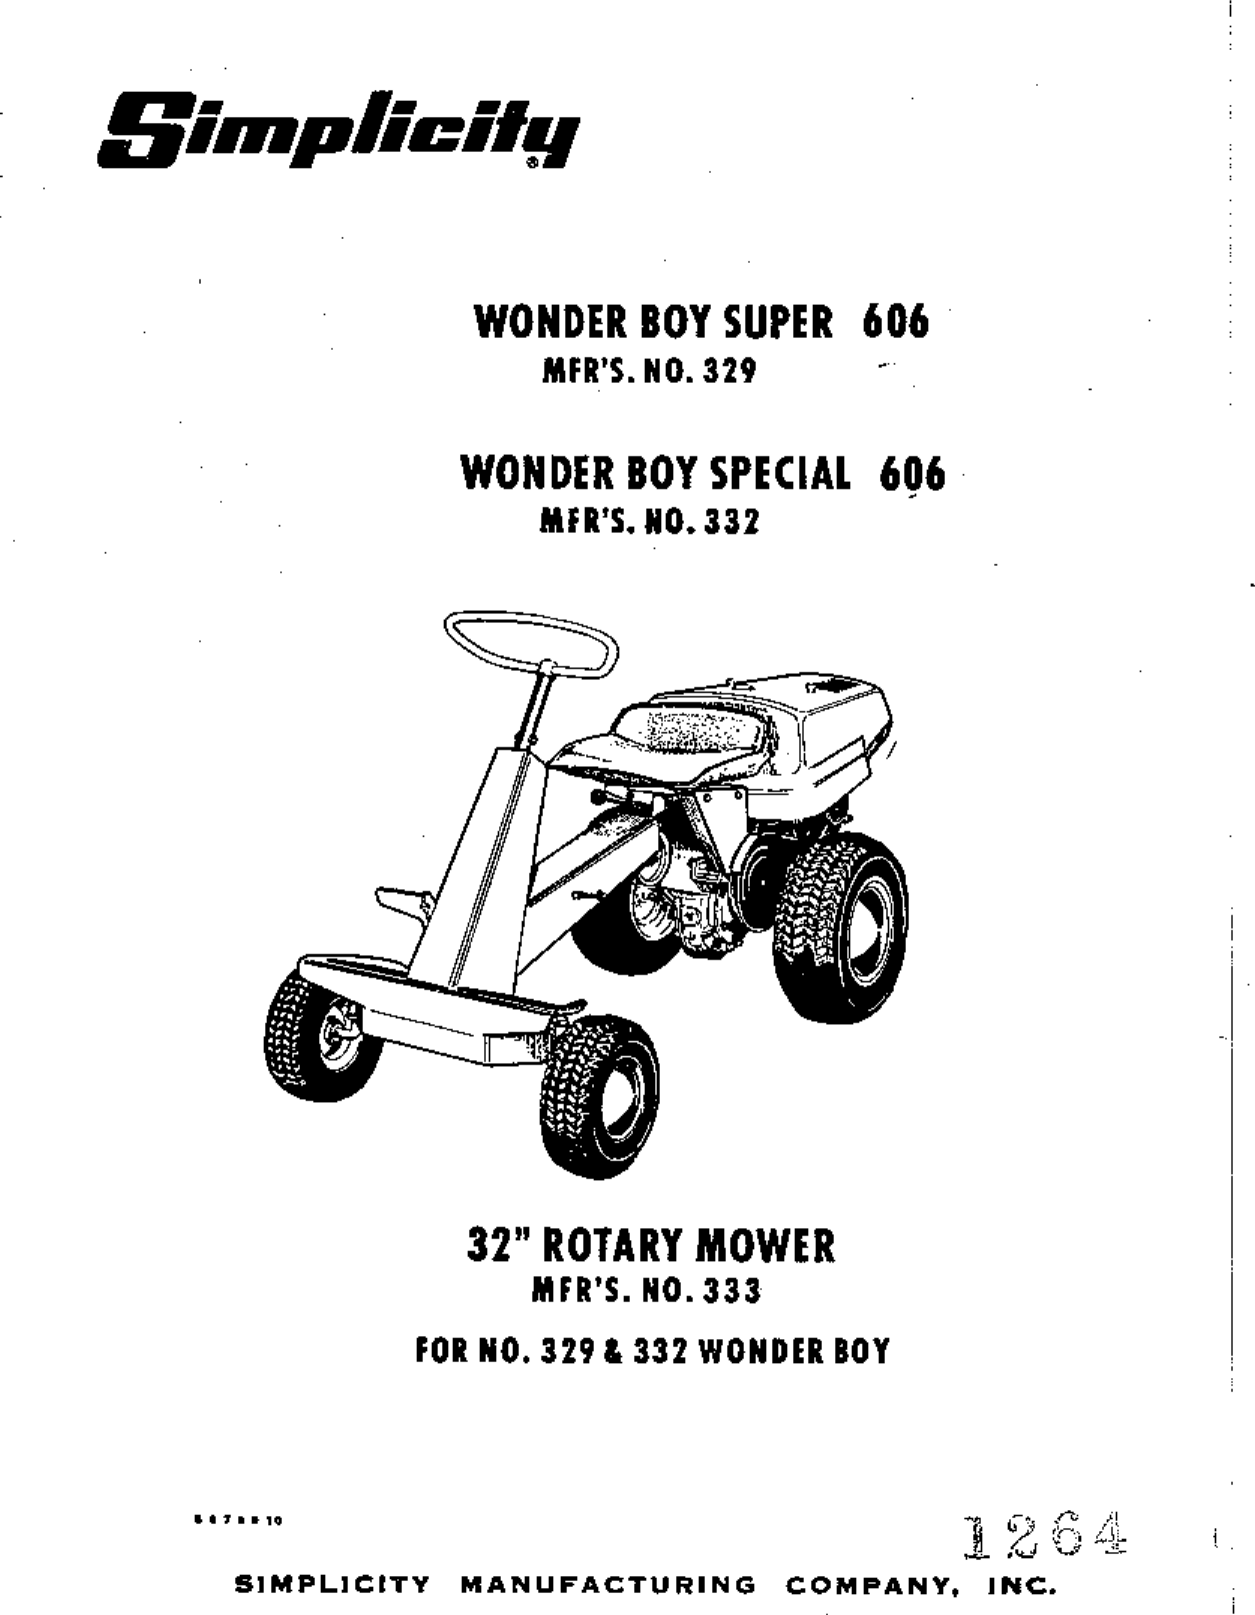 Page 1 of 12 - Simplicity Simplicity-Wonder-Boy-Super-606-Owners-Manual-  Simplicity-wonder-boy-super-606-owners-manual